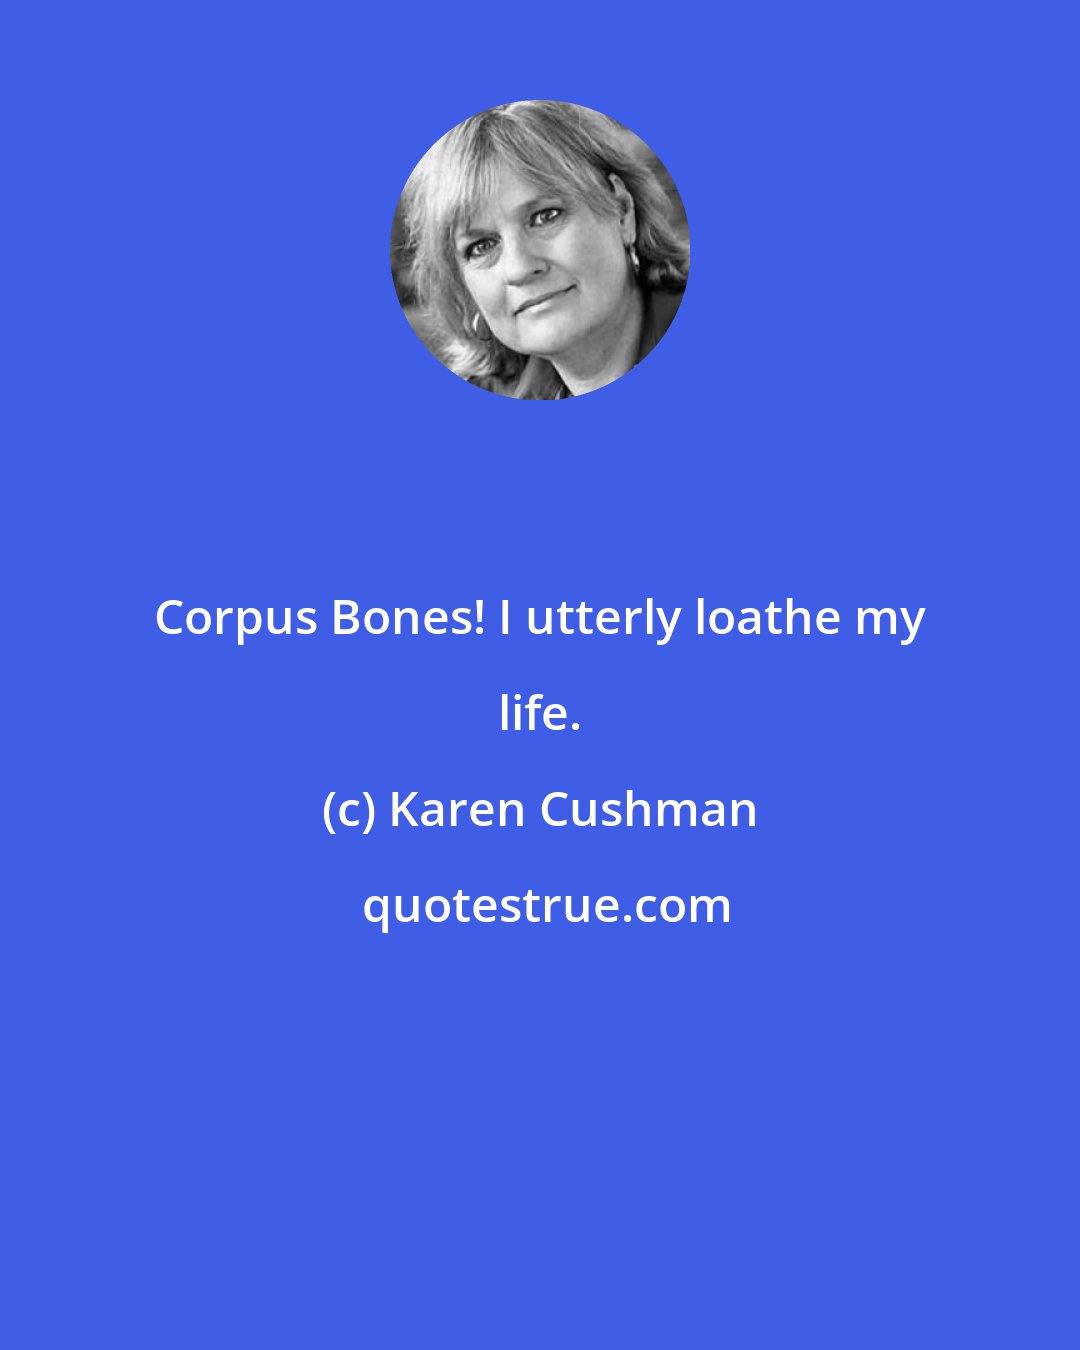 Karen Cushman: Corpus Bones! I utterly loathe my life.